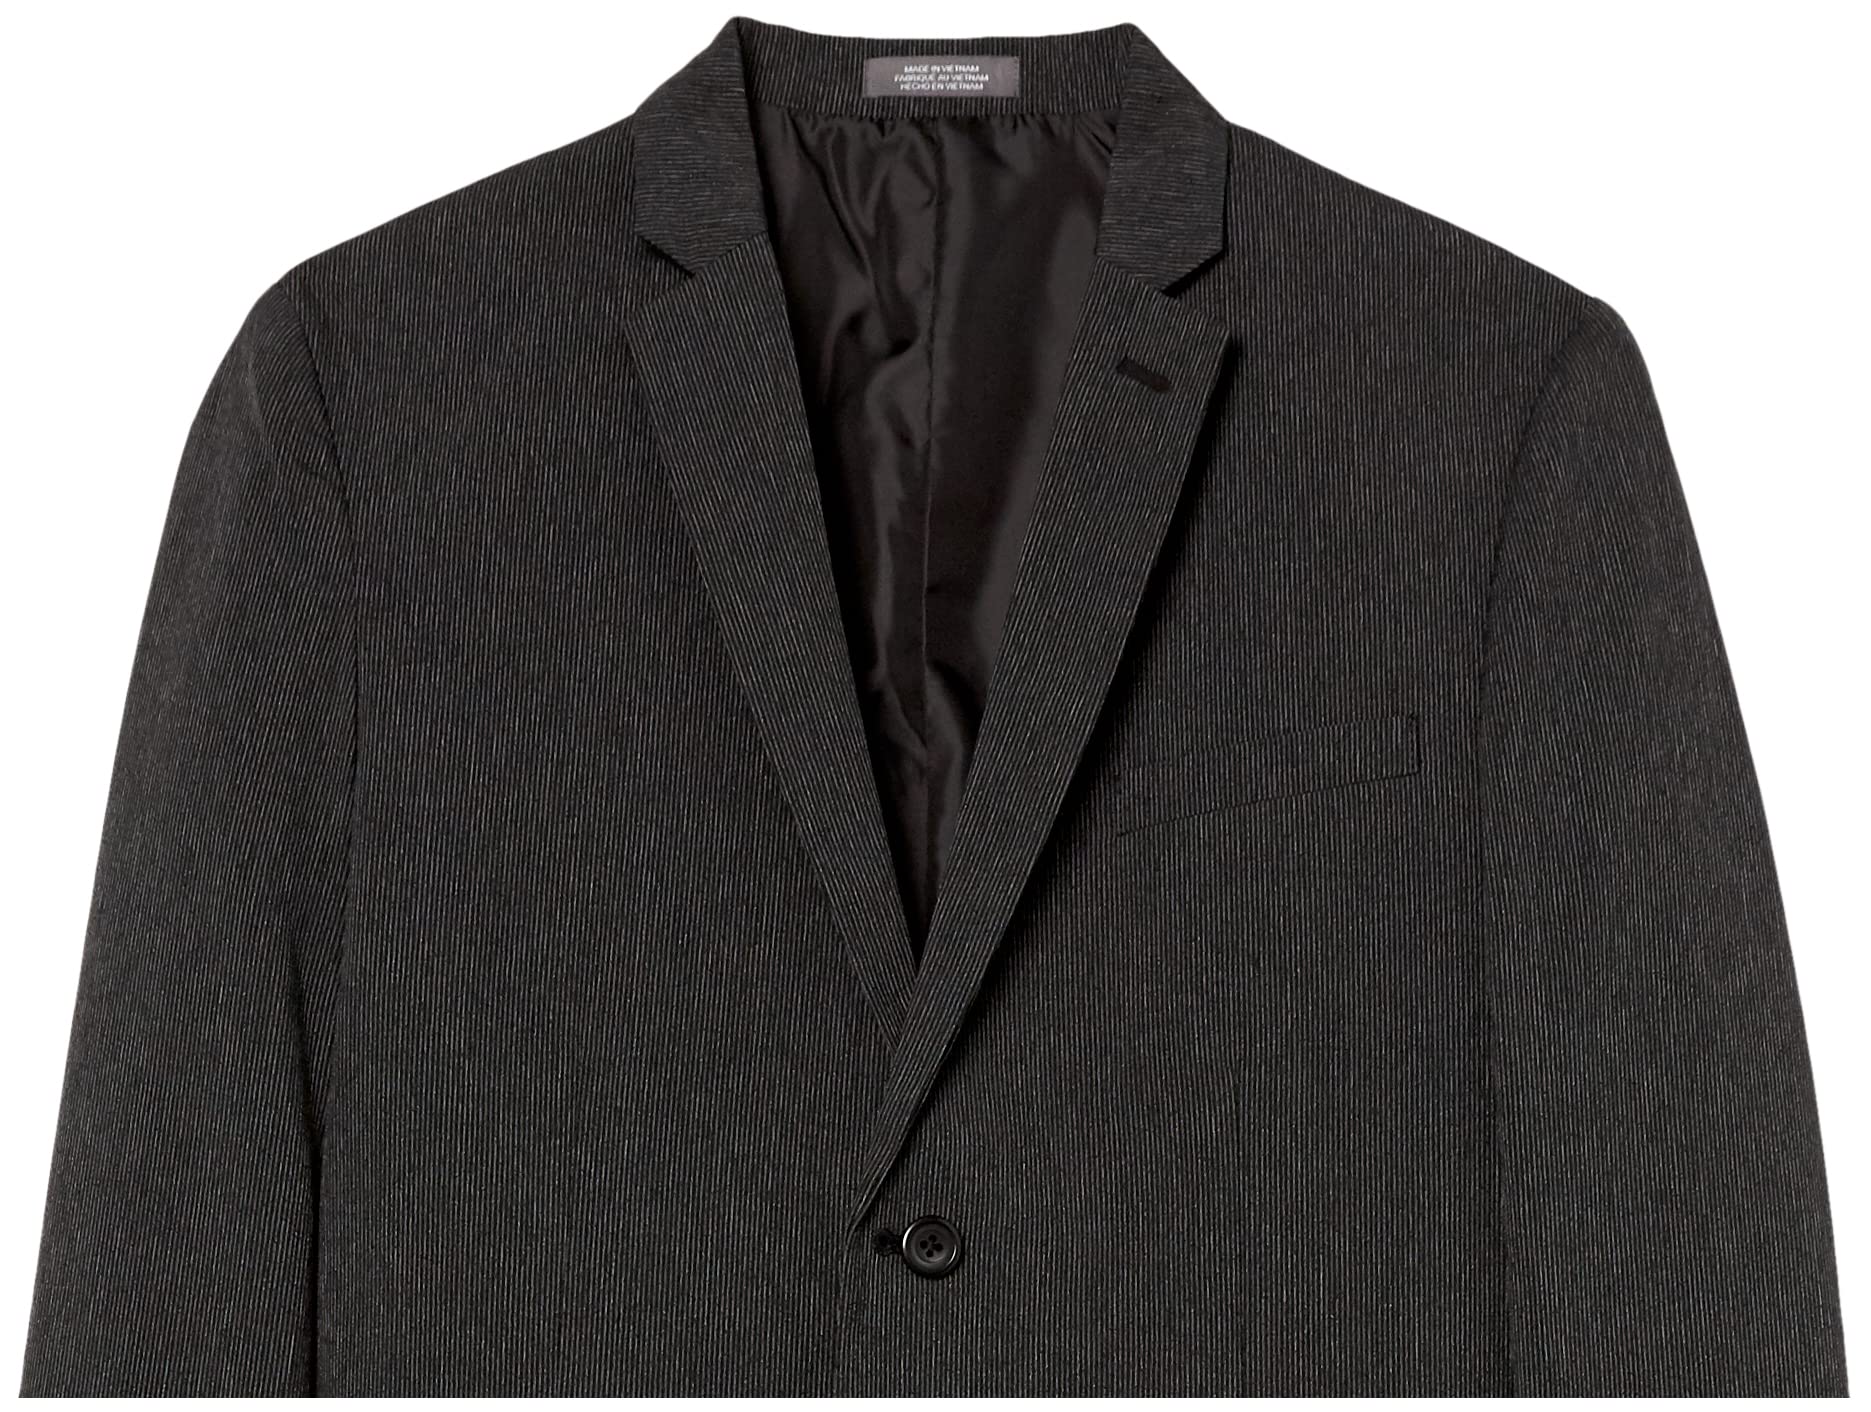 Van Heusen Boys' 2-Piece Formal Dresswear Suit